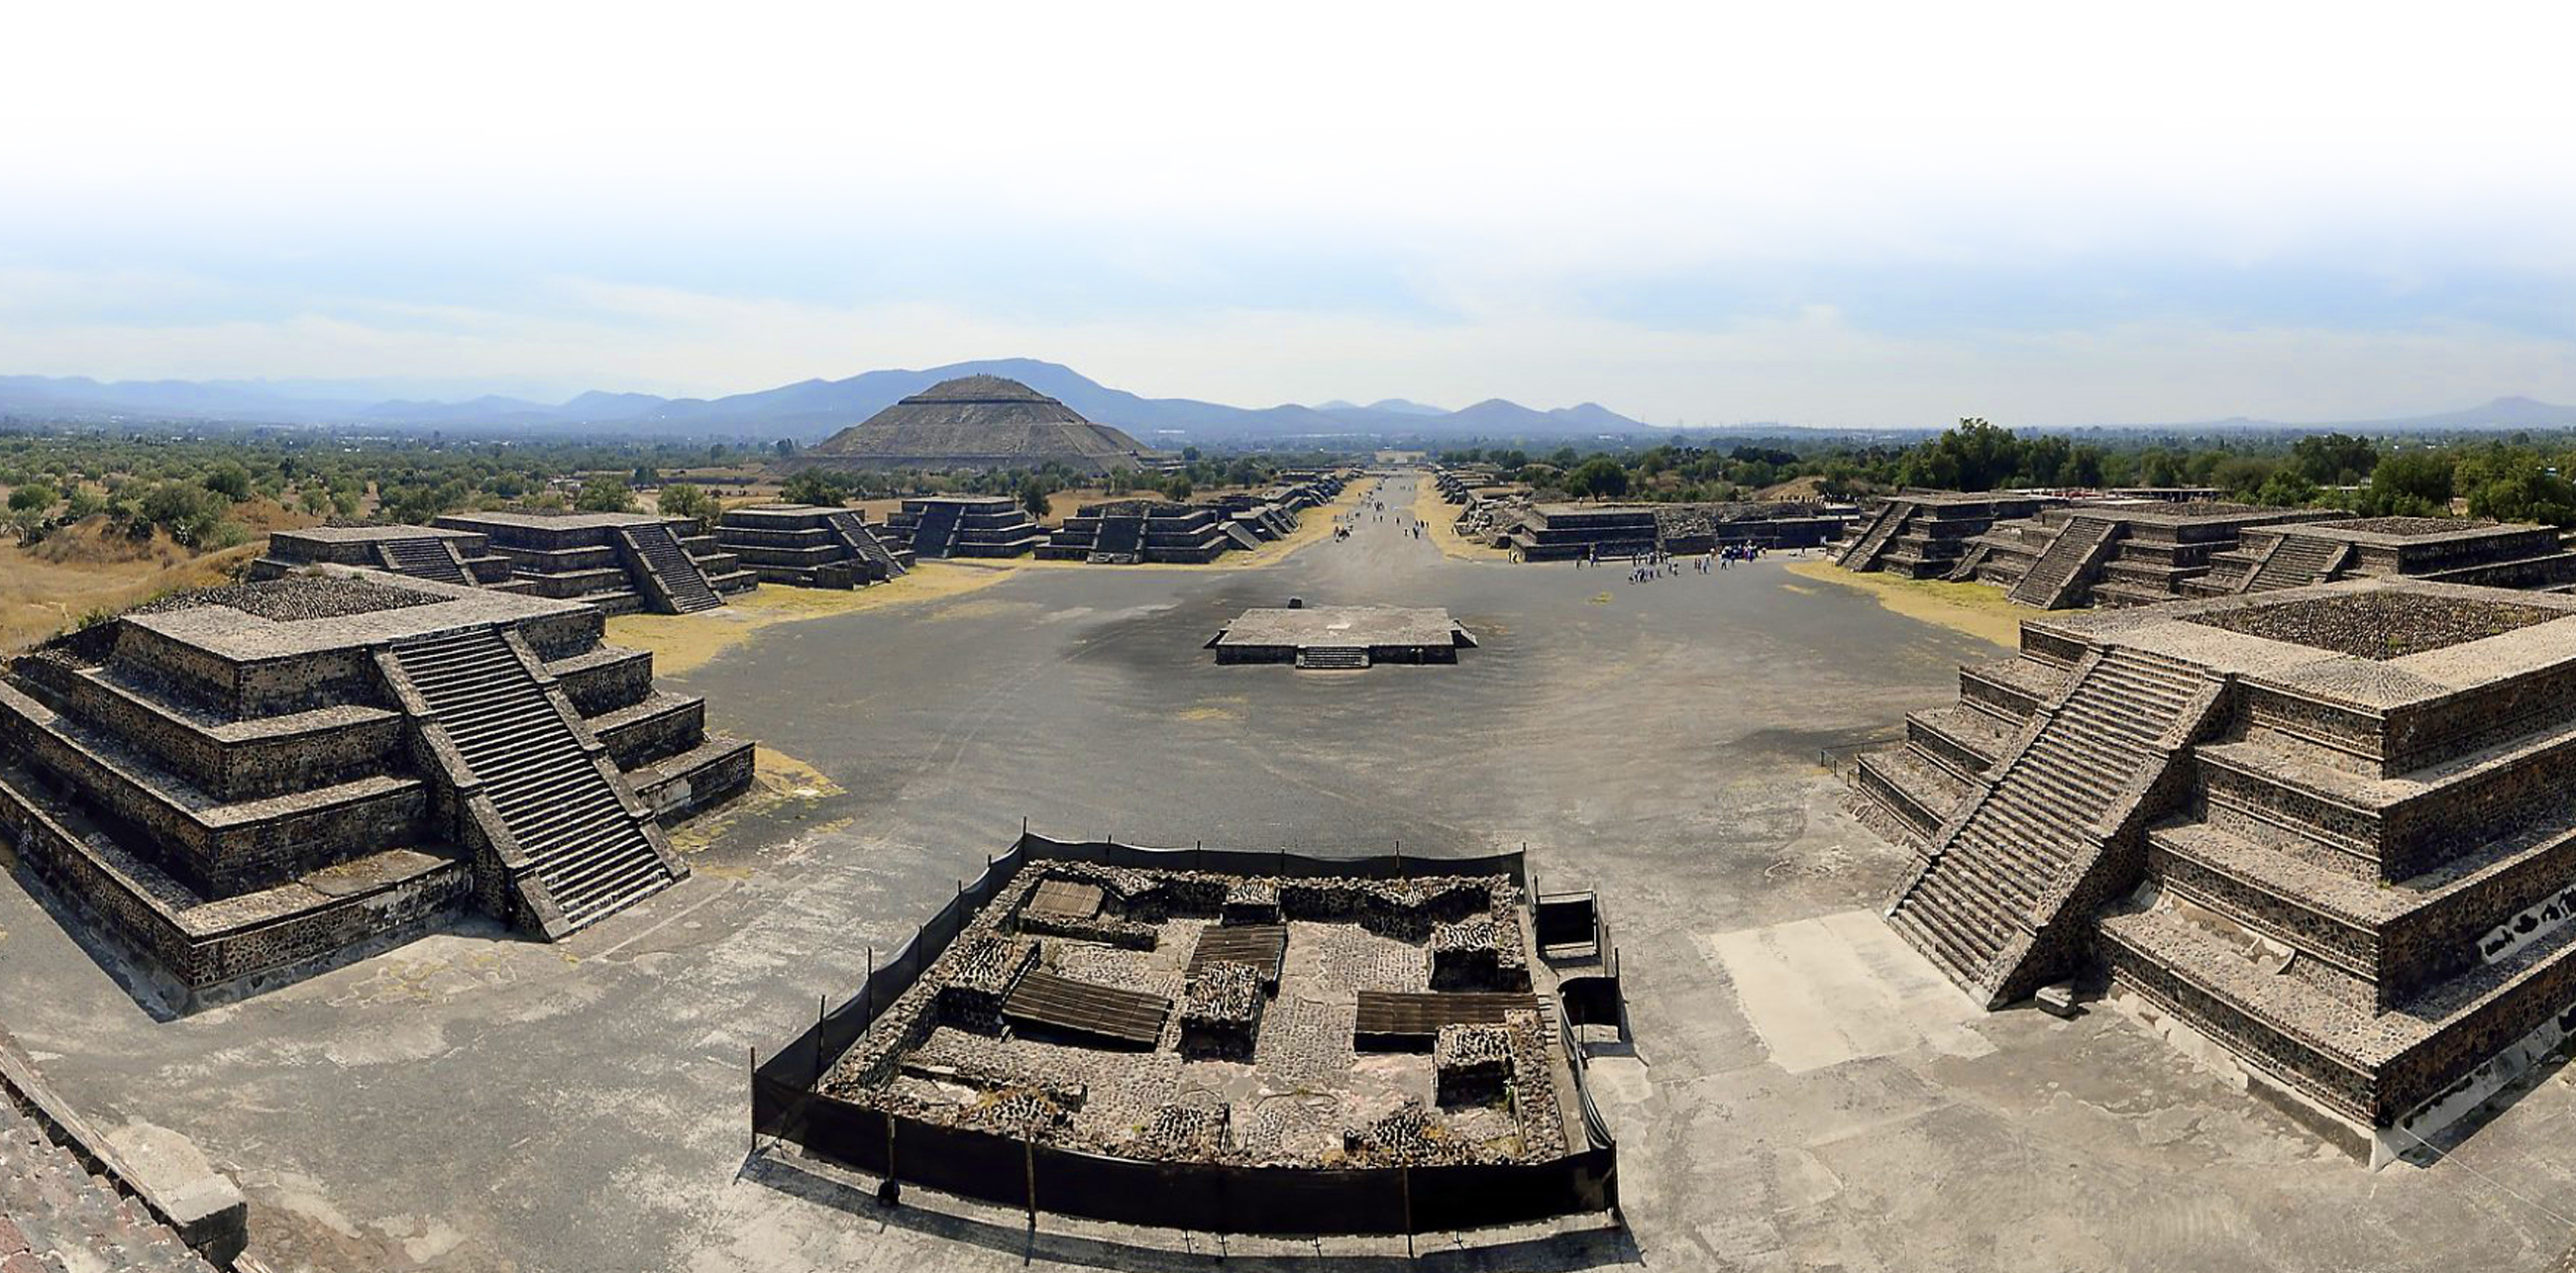 Panoramica de la ciudad Prehispánica de Teotihuacán | Colombian Tourist